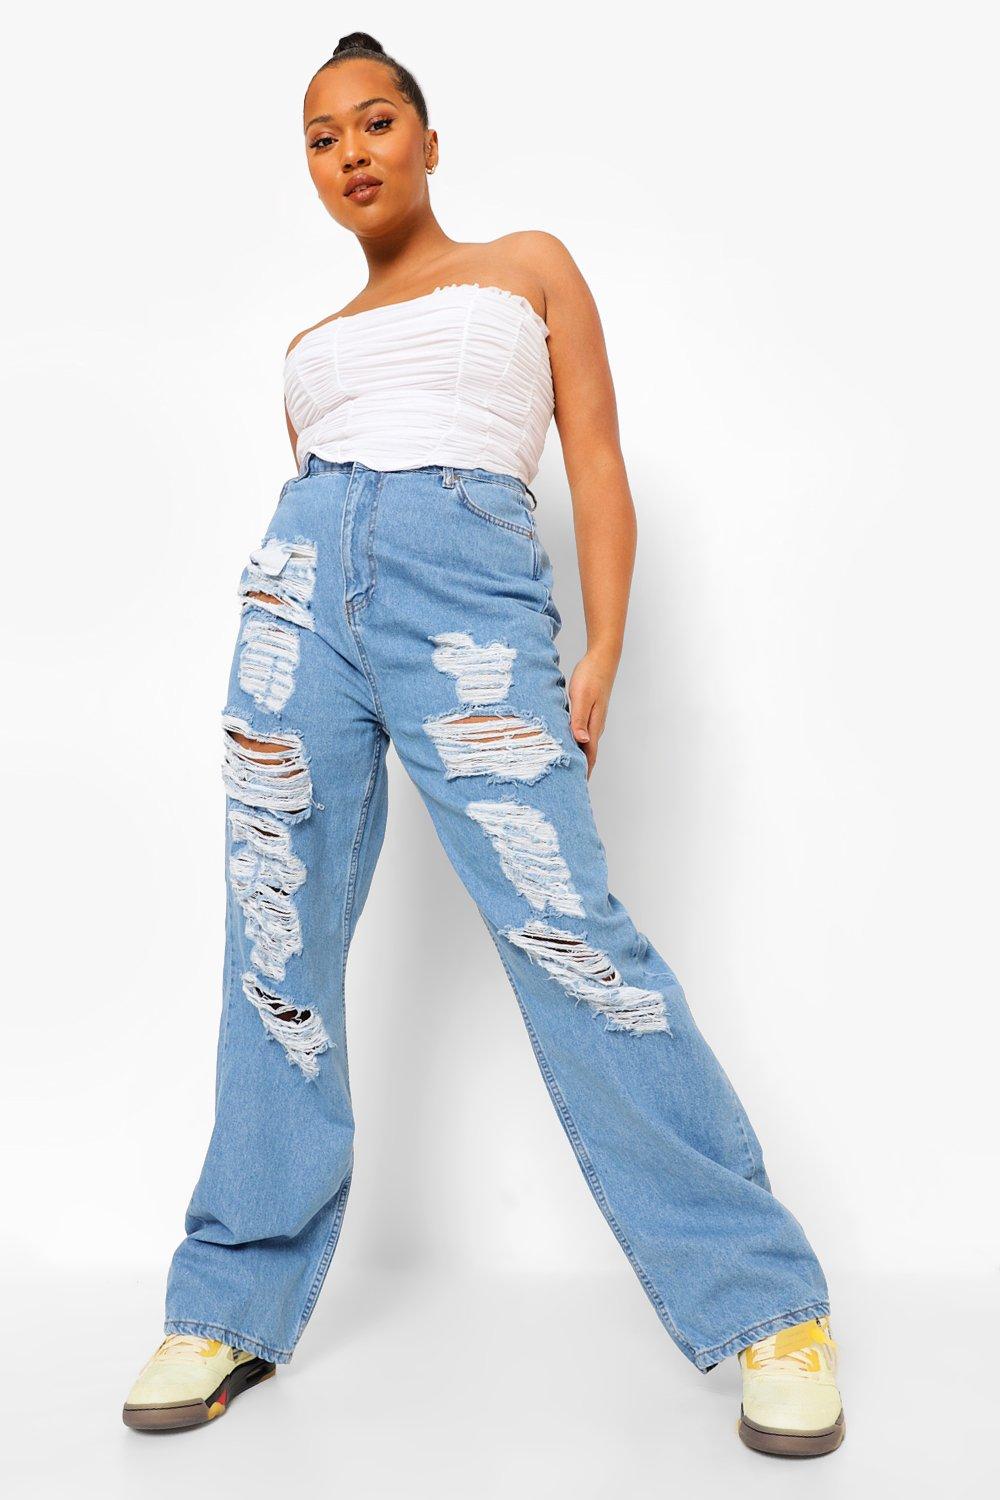 Grande Taille Boohoo Femme Vêtements Pantalons & Jeans Pantalons Cargos 